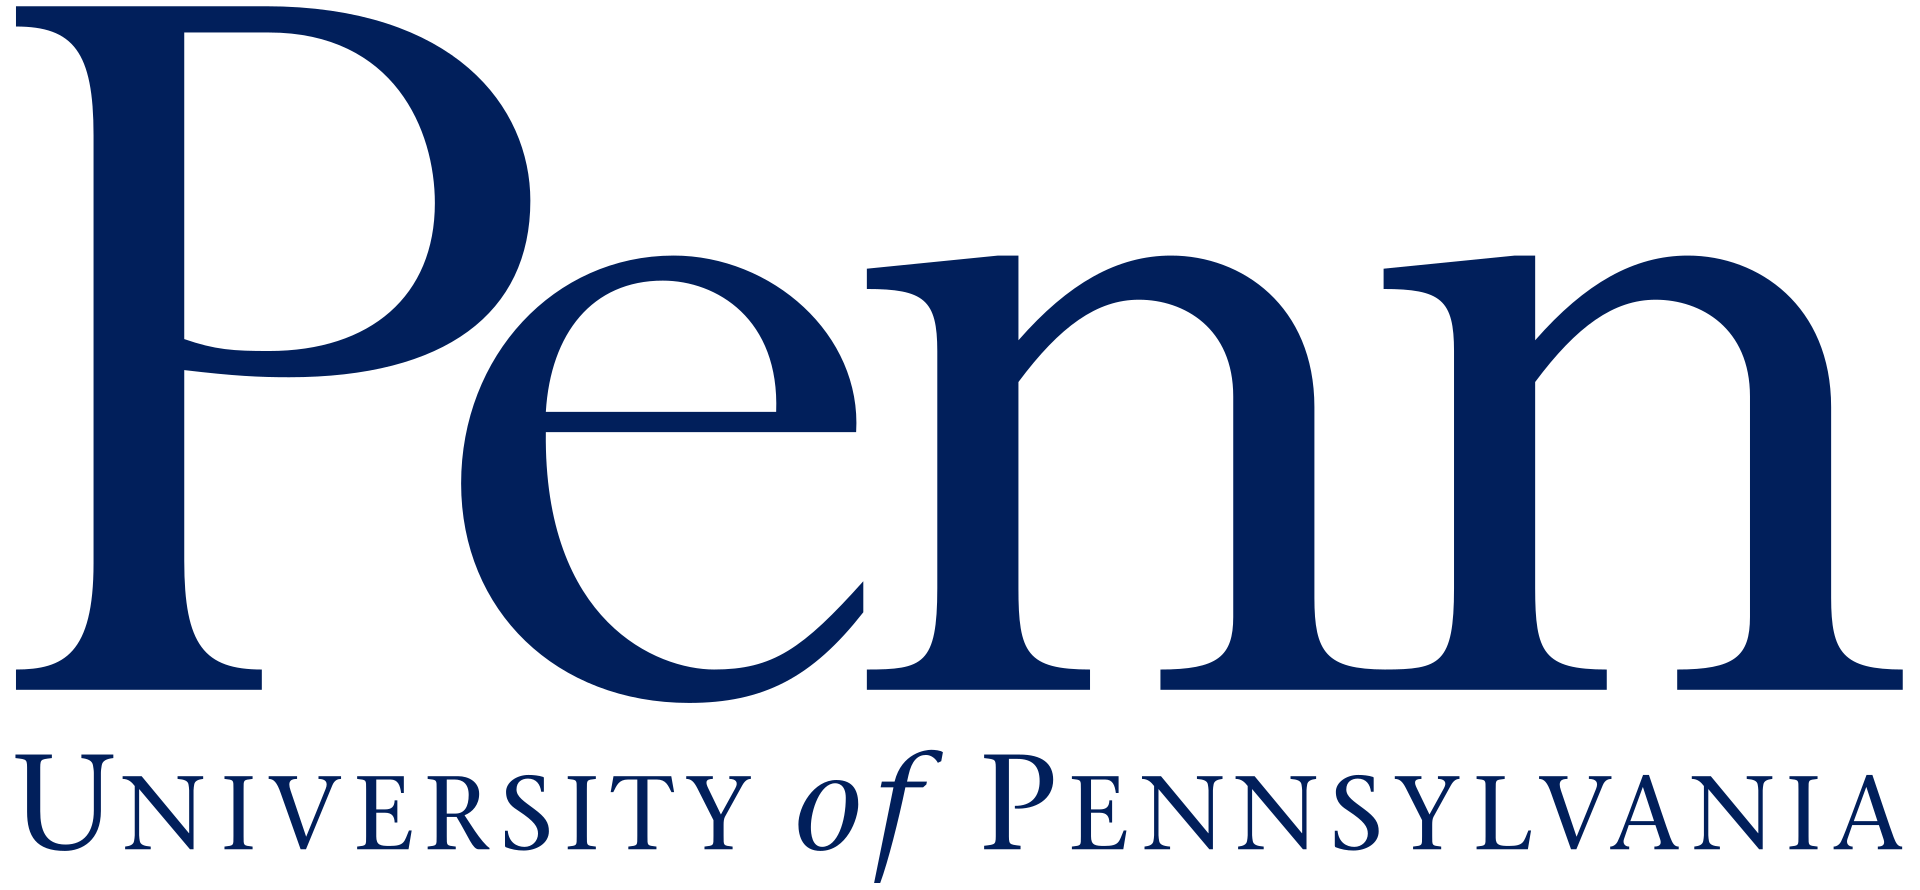 University of Pennsylvania logo, By University of Pennsylvania - http://www.宾夕法尼亚大学.edu/about/styleguide-logo-branding, 公共领域, http://commons.维基.org/w/index.php?curid = 66569976 "